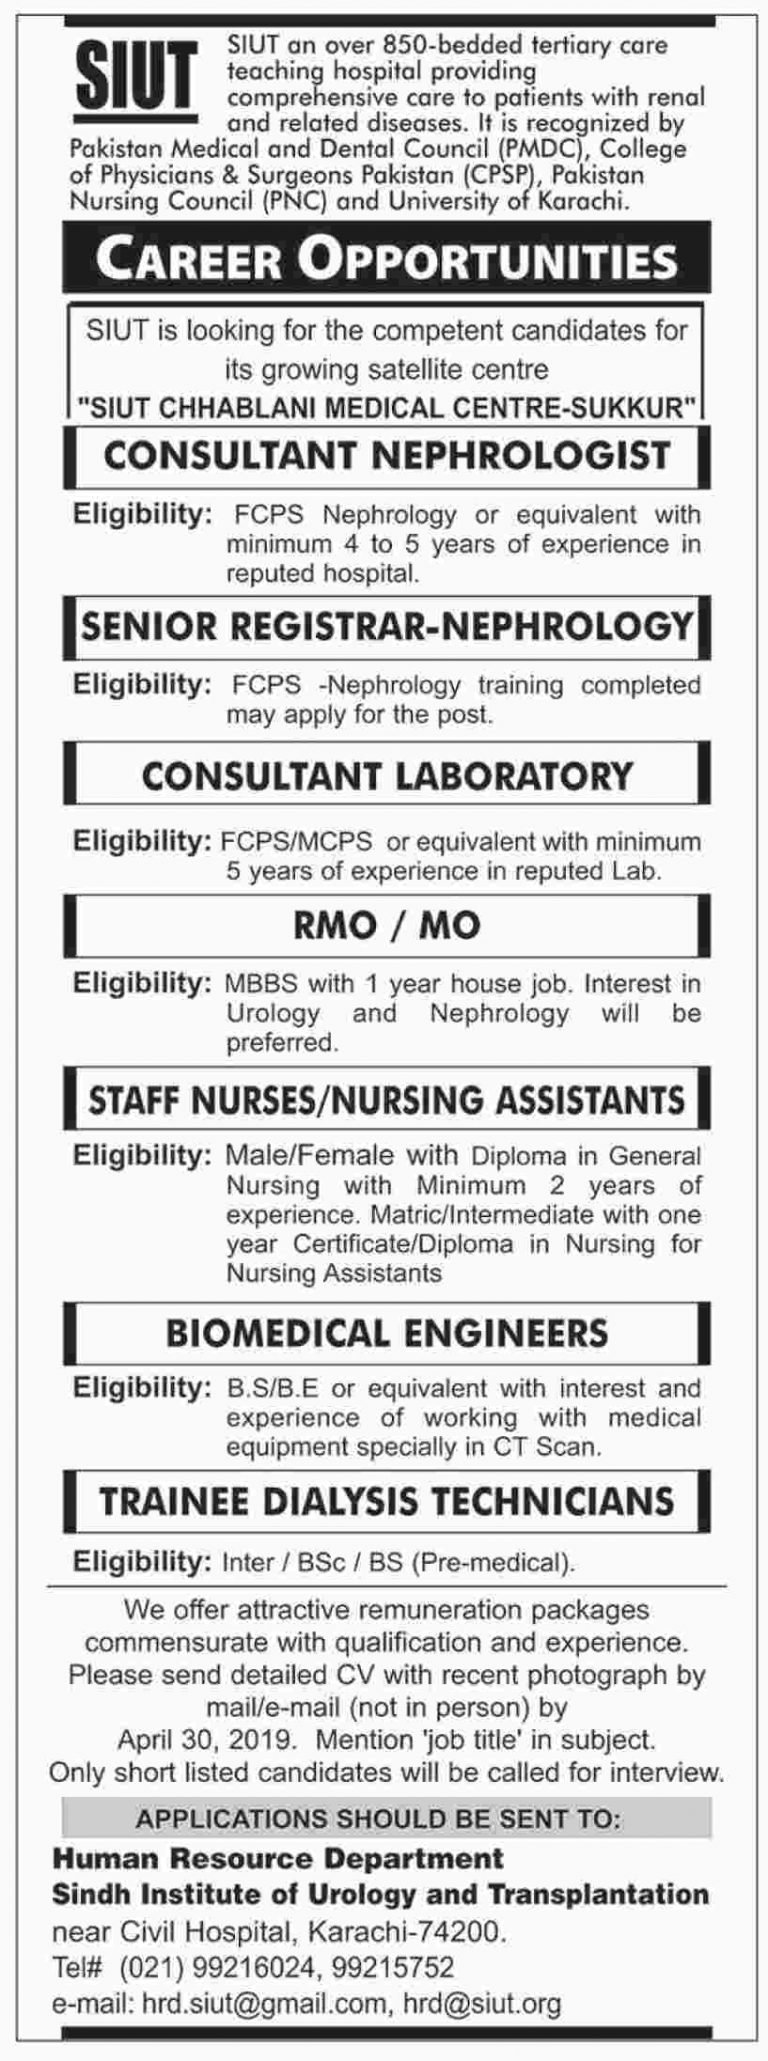 SUIT Hospital Karachi Jobs 2019 for Various Medical / Healthcare Posts